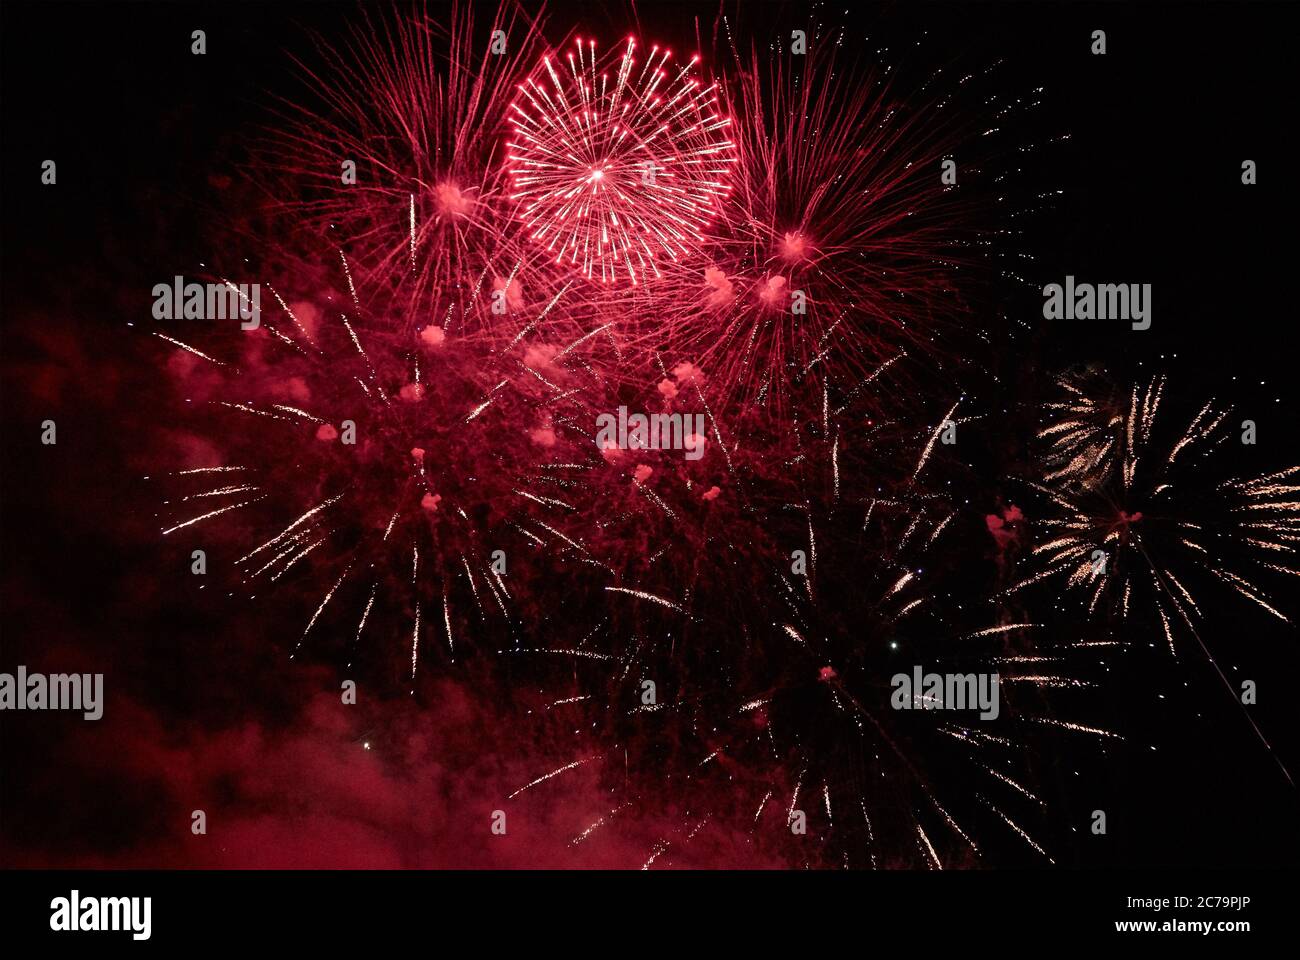 Bright colorful fireworks in the dark night sky Stock Photo